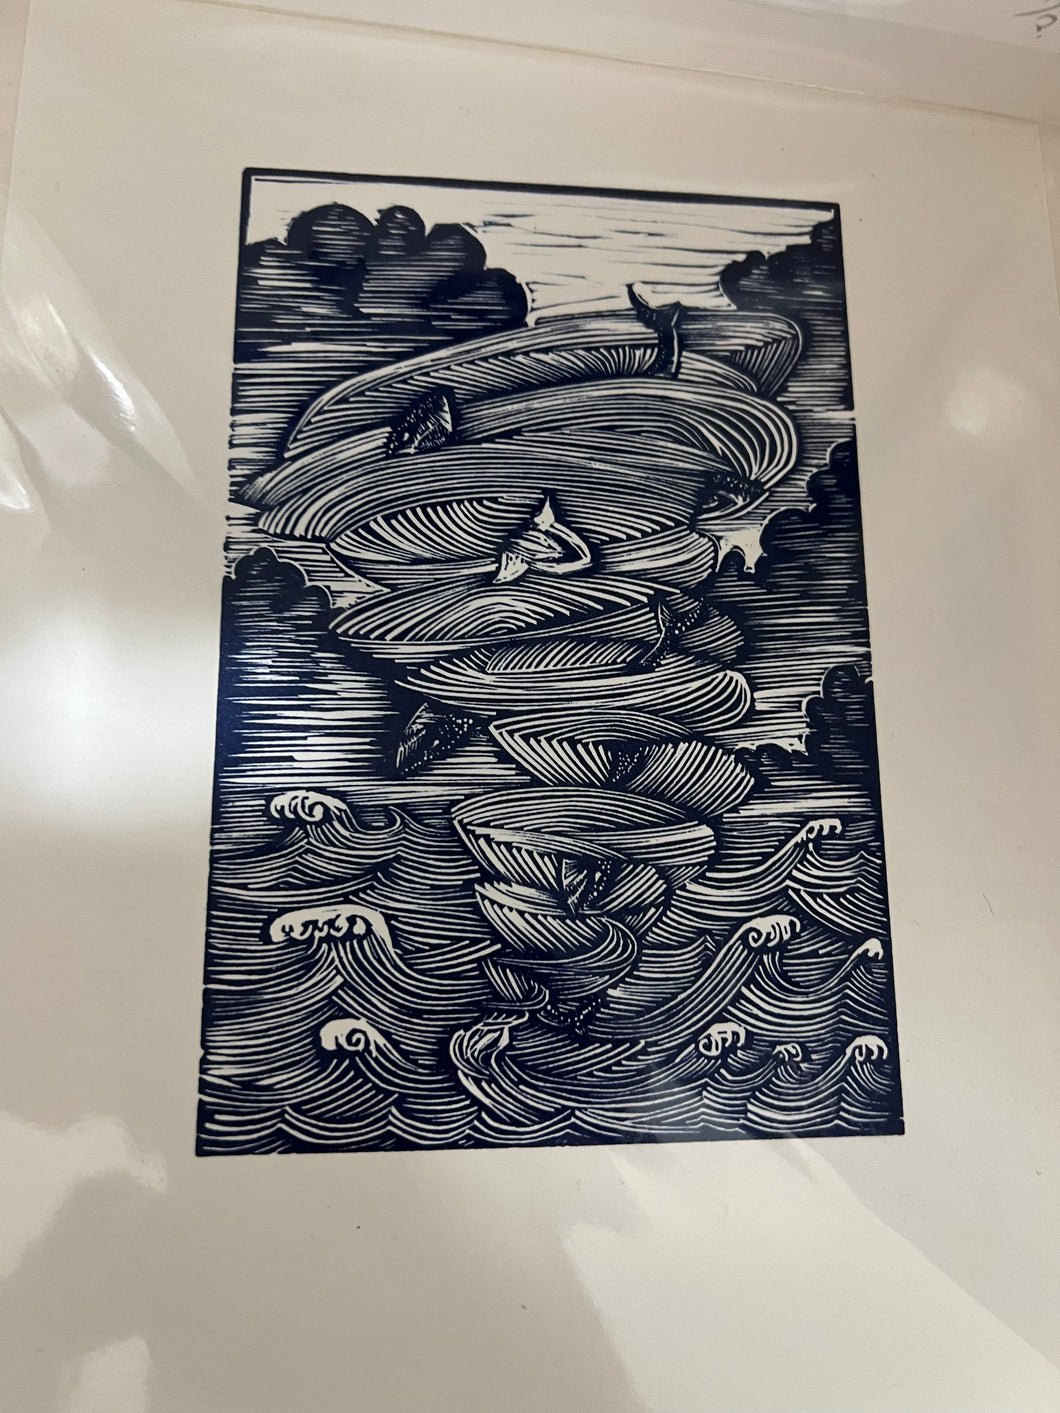 Prints for boaters: sharknado, mermaid, Kraken